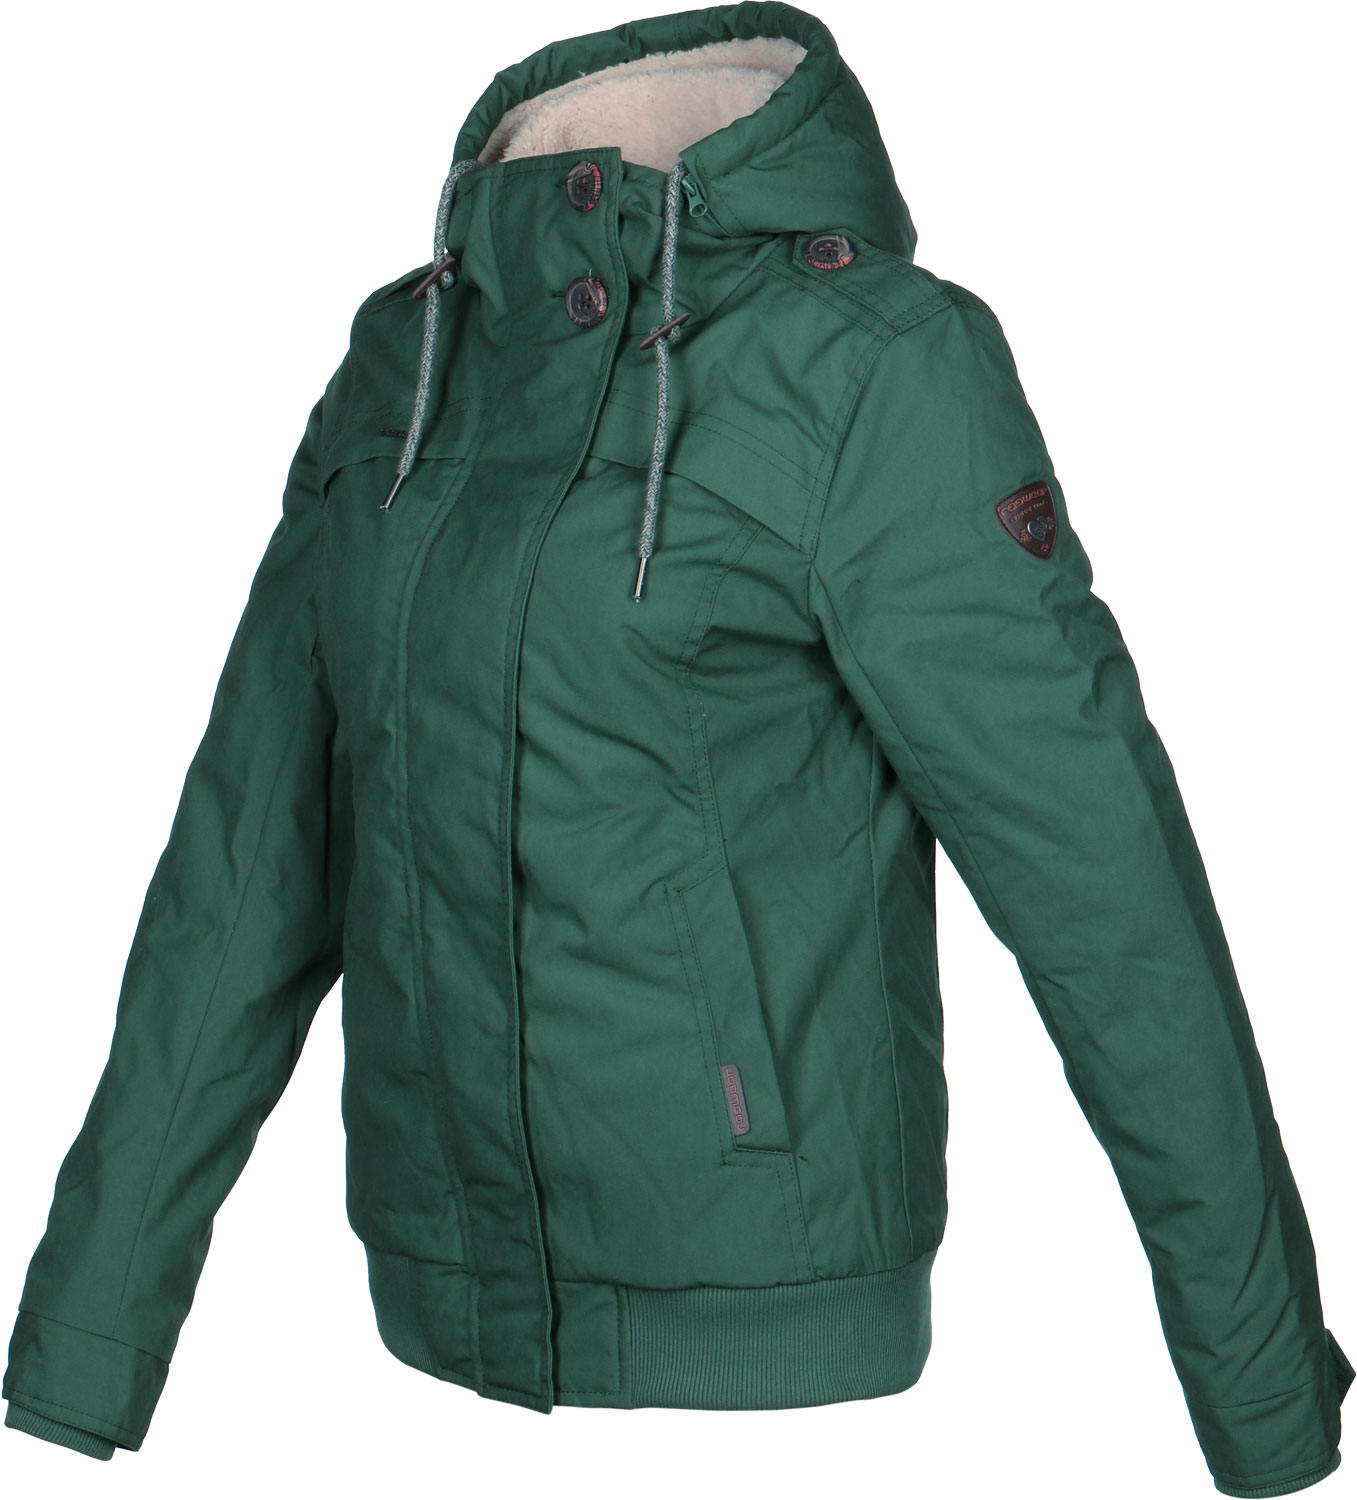 Ragwear Winter Jackets ... ragwear ewok winter jacket high-closing collar women green basic autumn  winter kj1415006 dpjmbzc ... FGTETBH